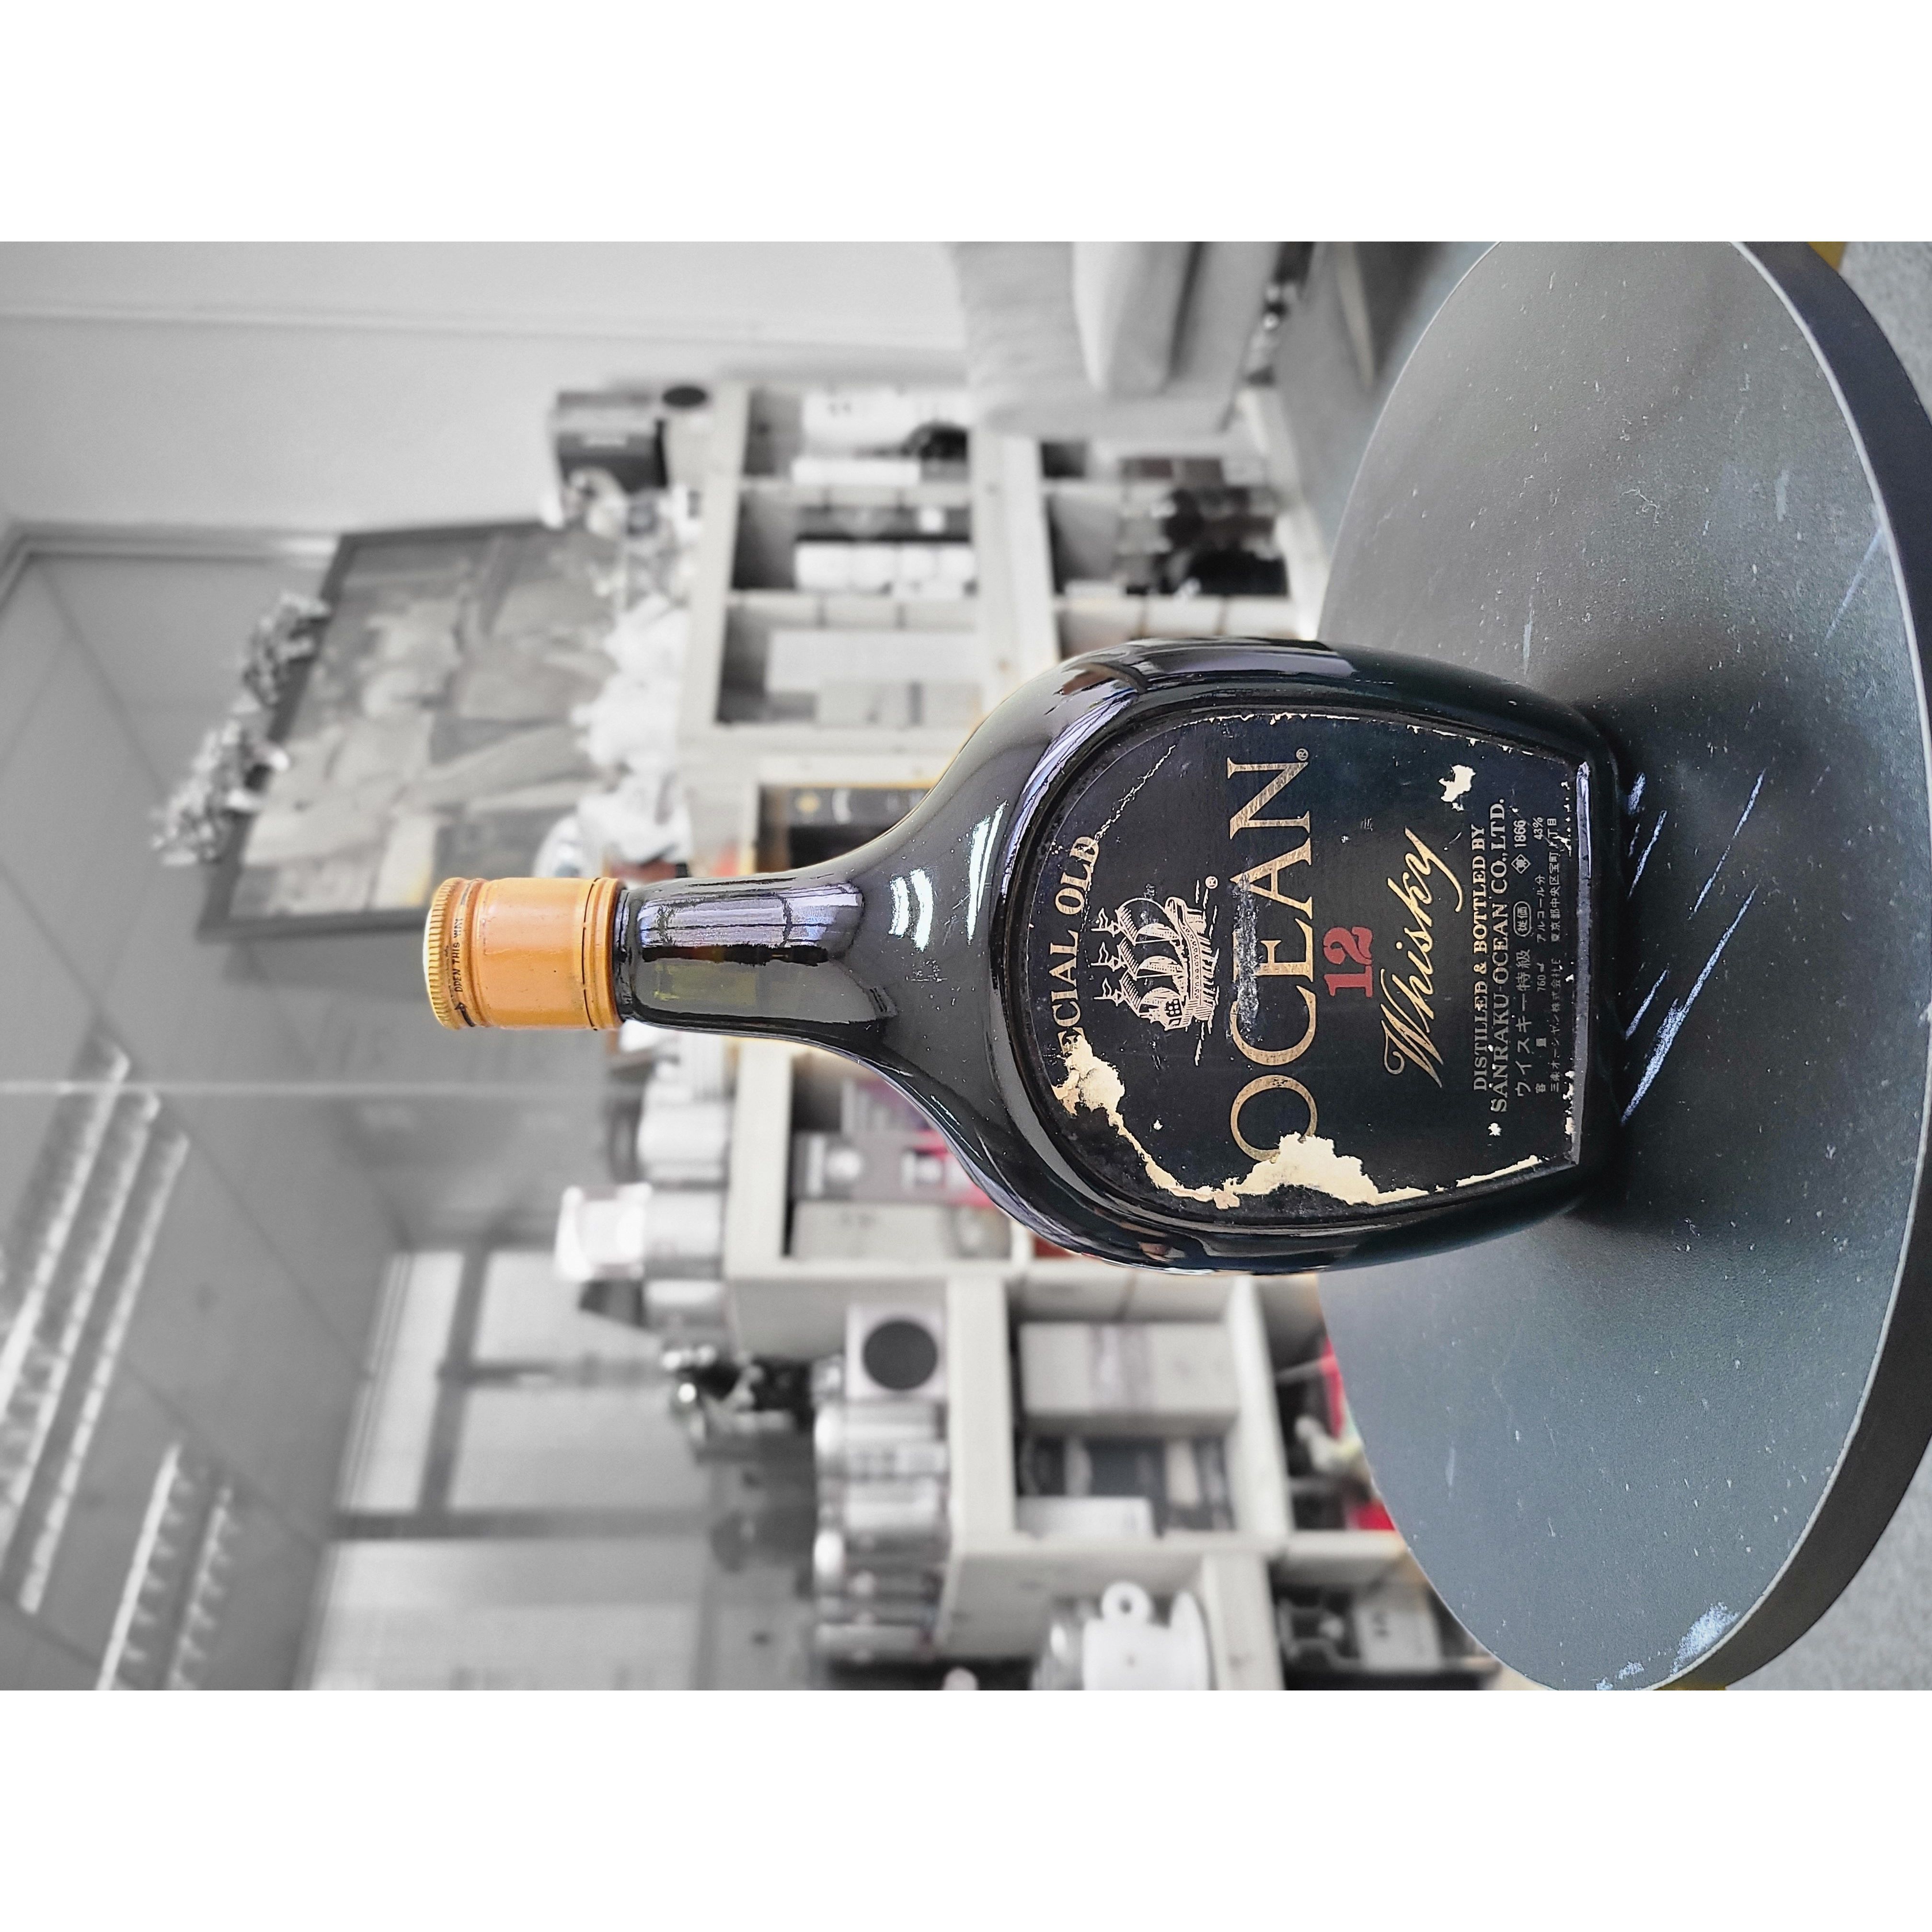 (日本威士忌輕井澤前身)Ocean years 12 old special old whisky 760ml 43%